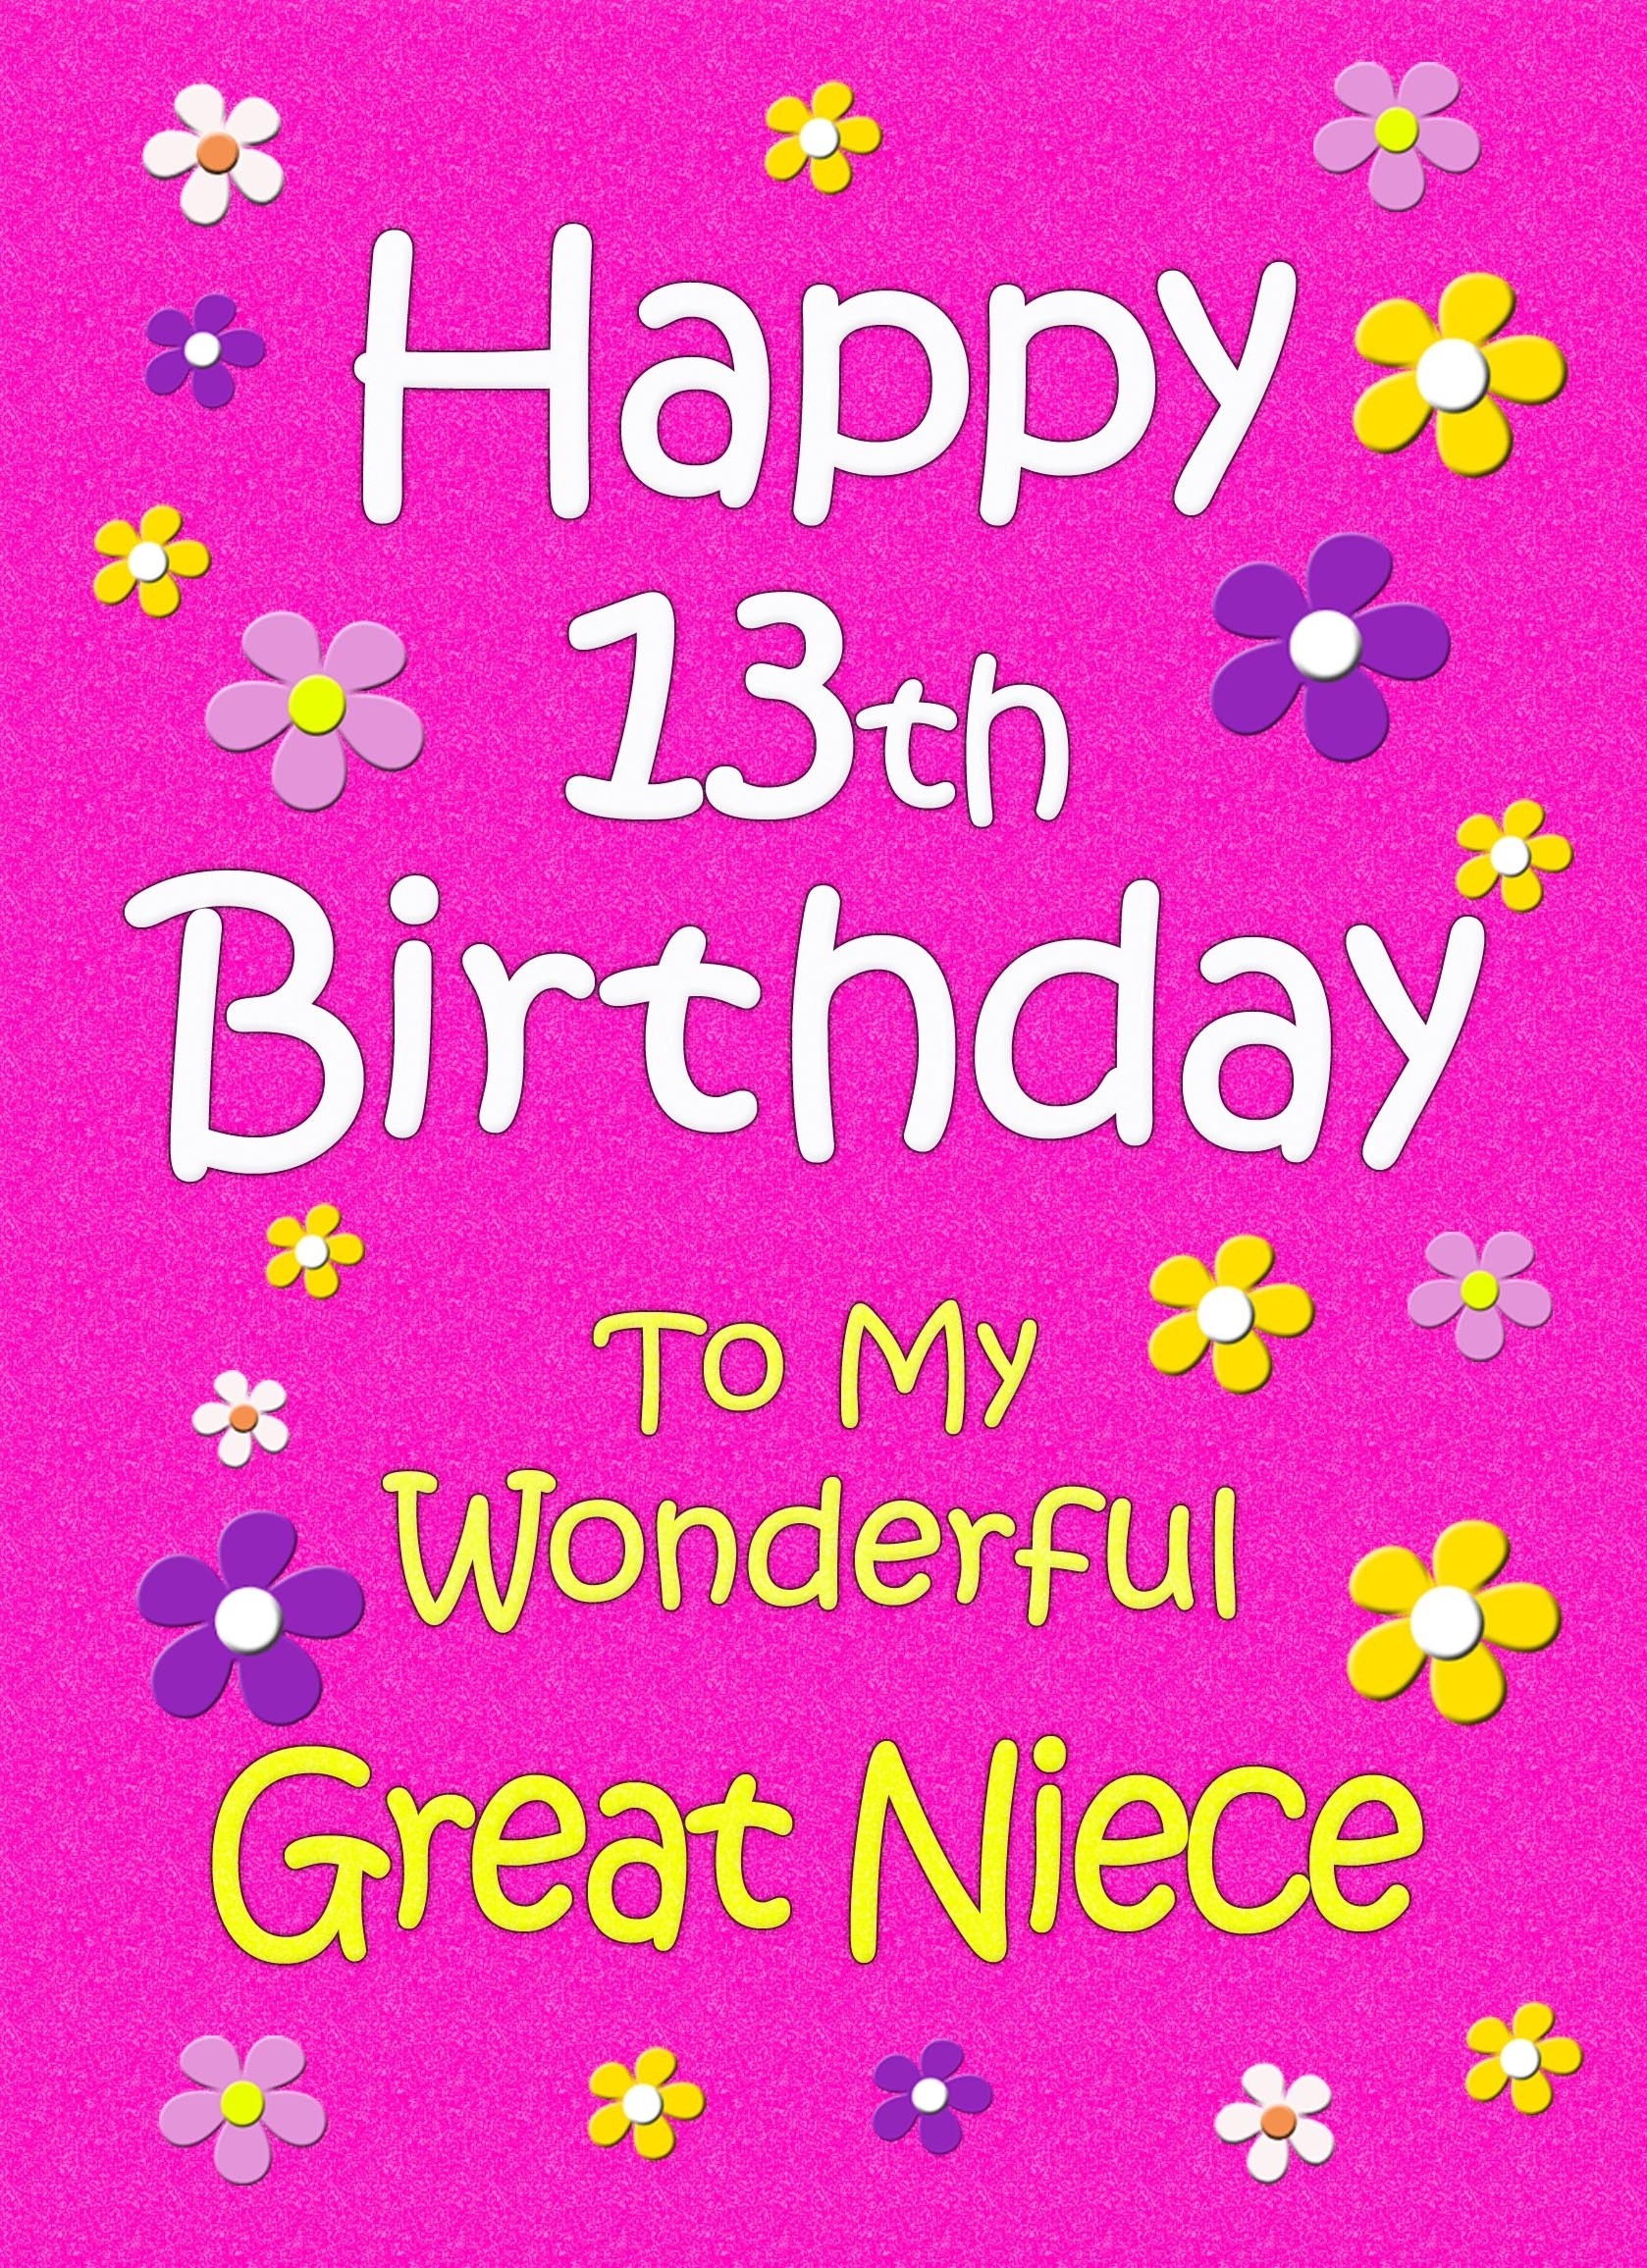 Great Niece 13th Birthday Card (Pink)